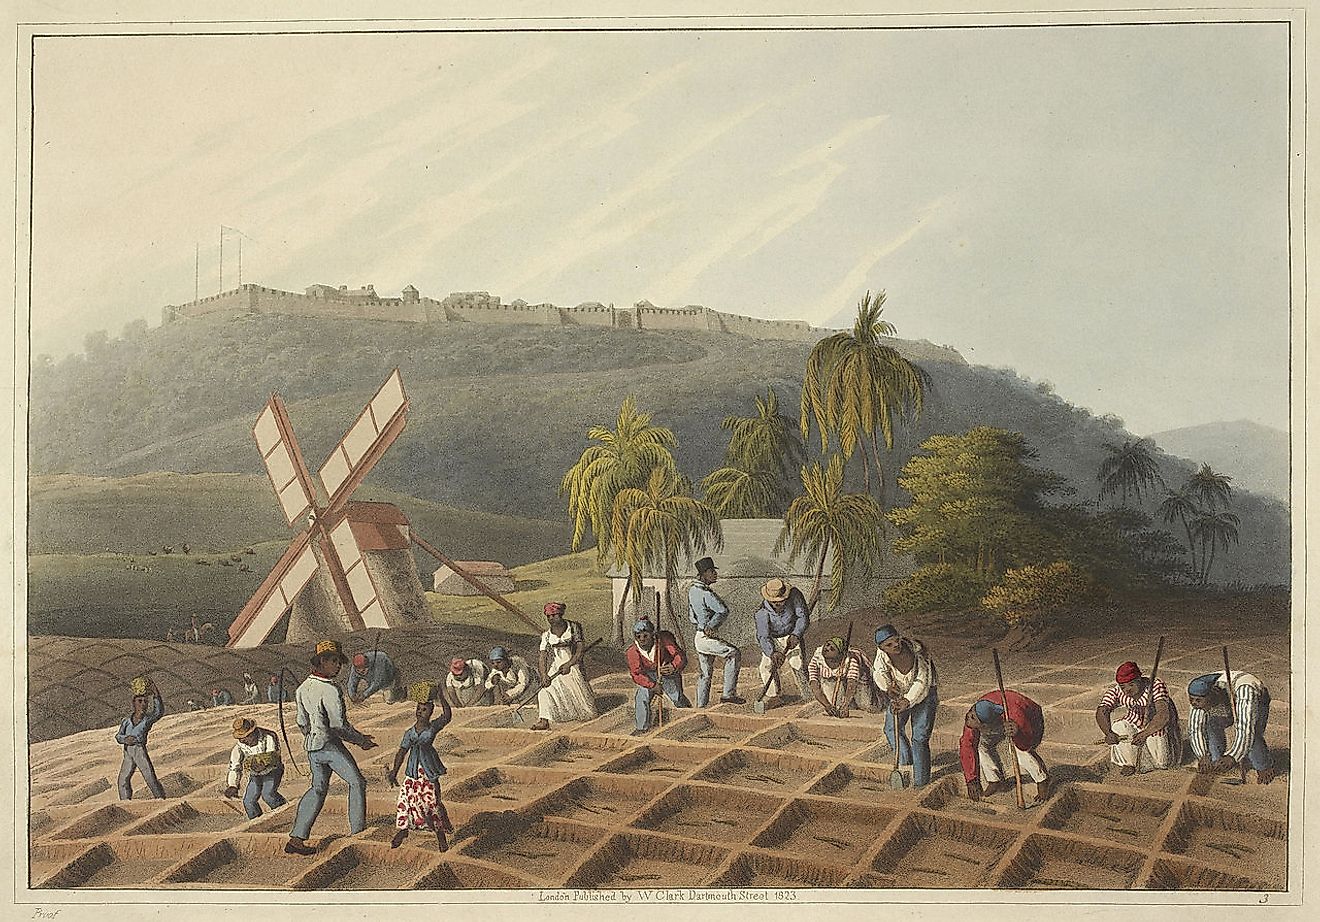 Slaves working on a plantation.